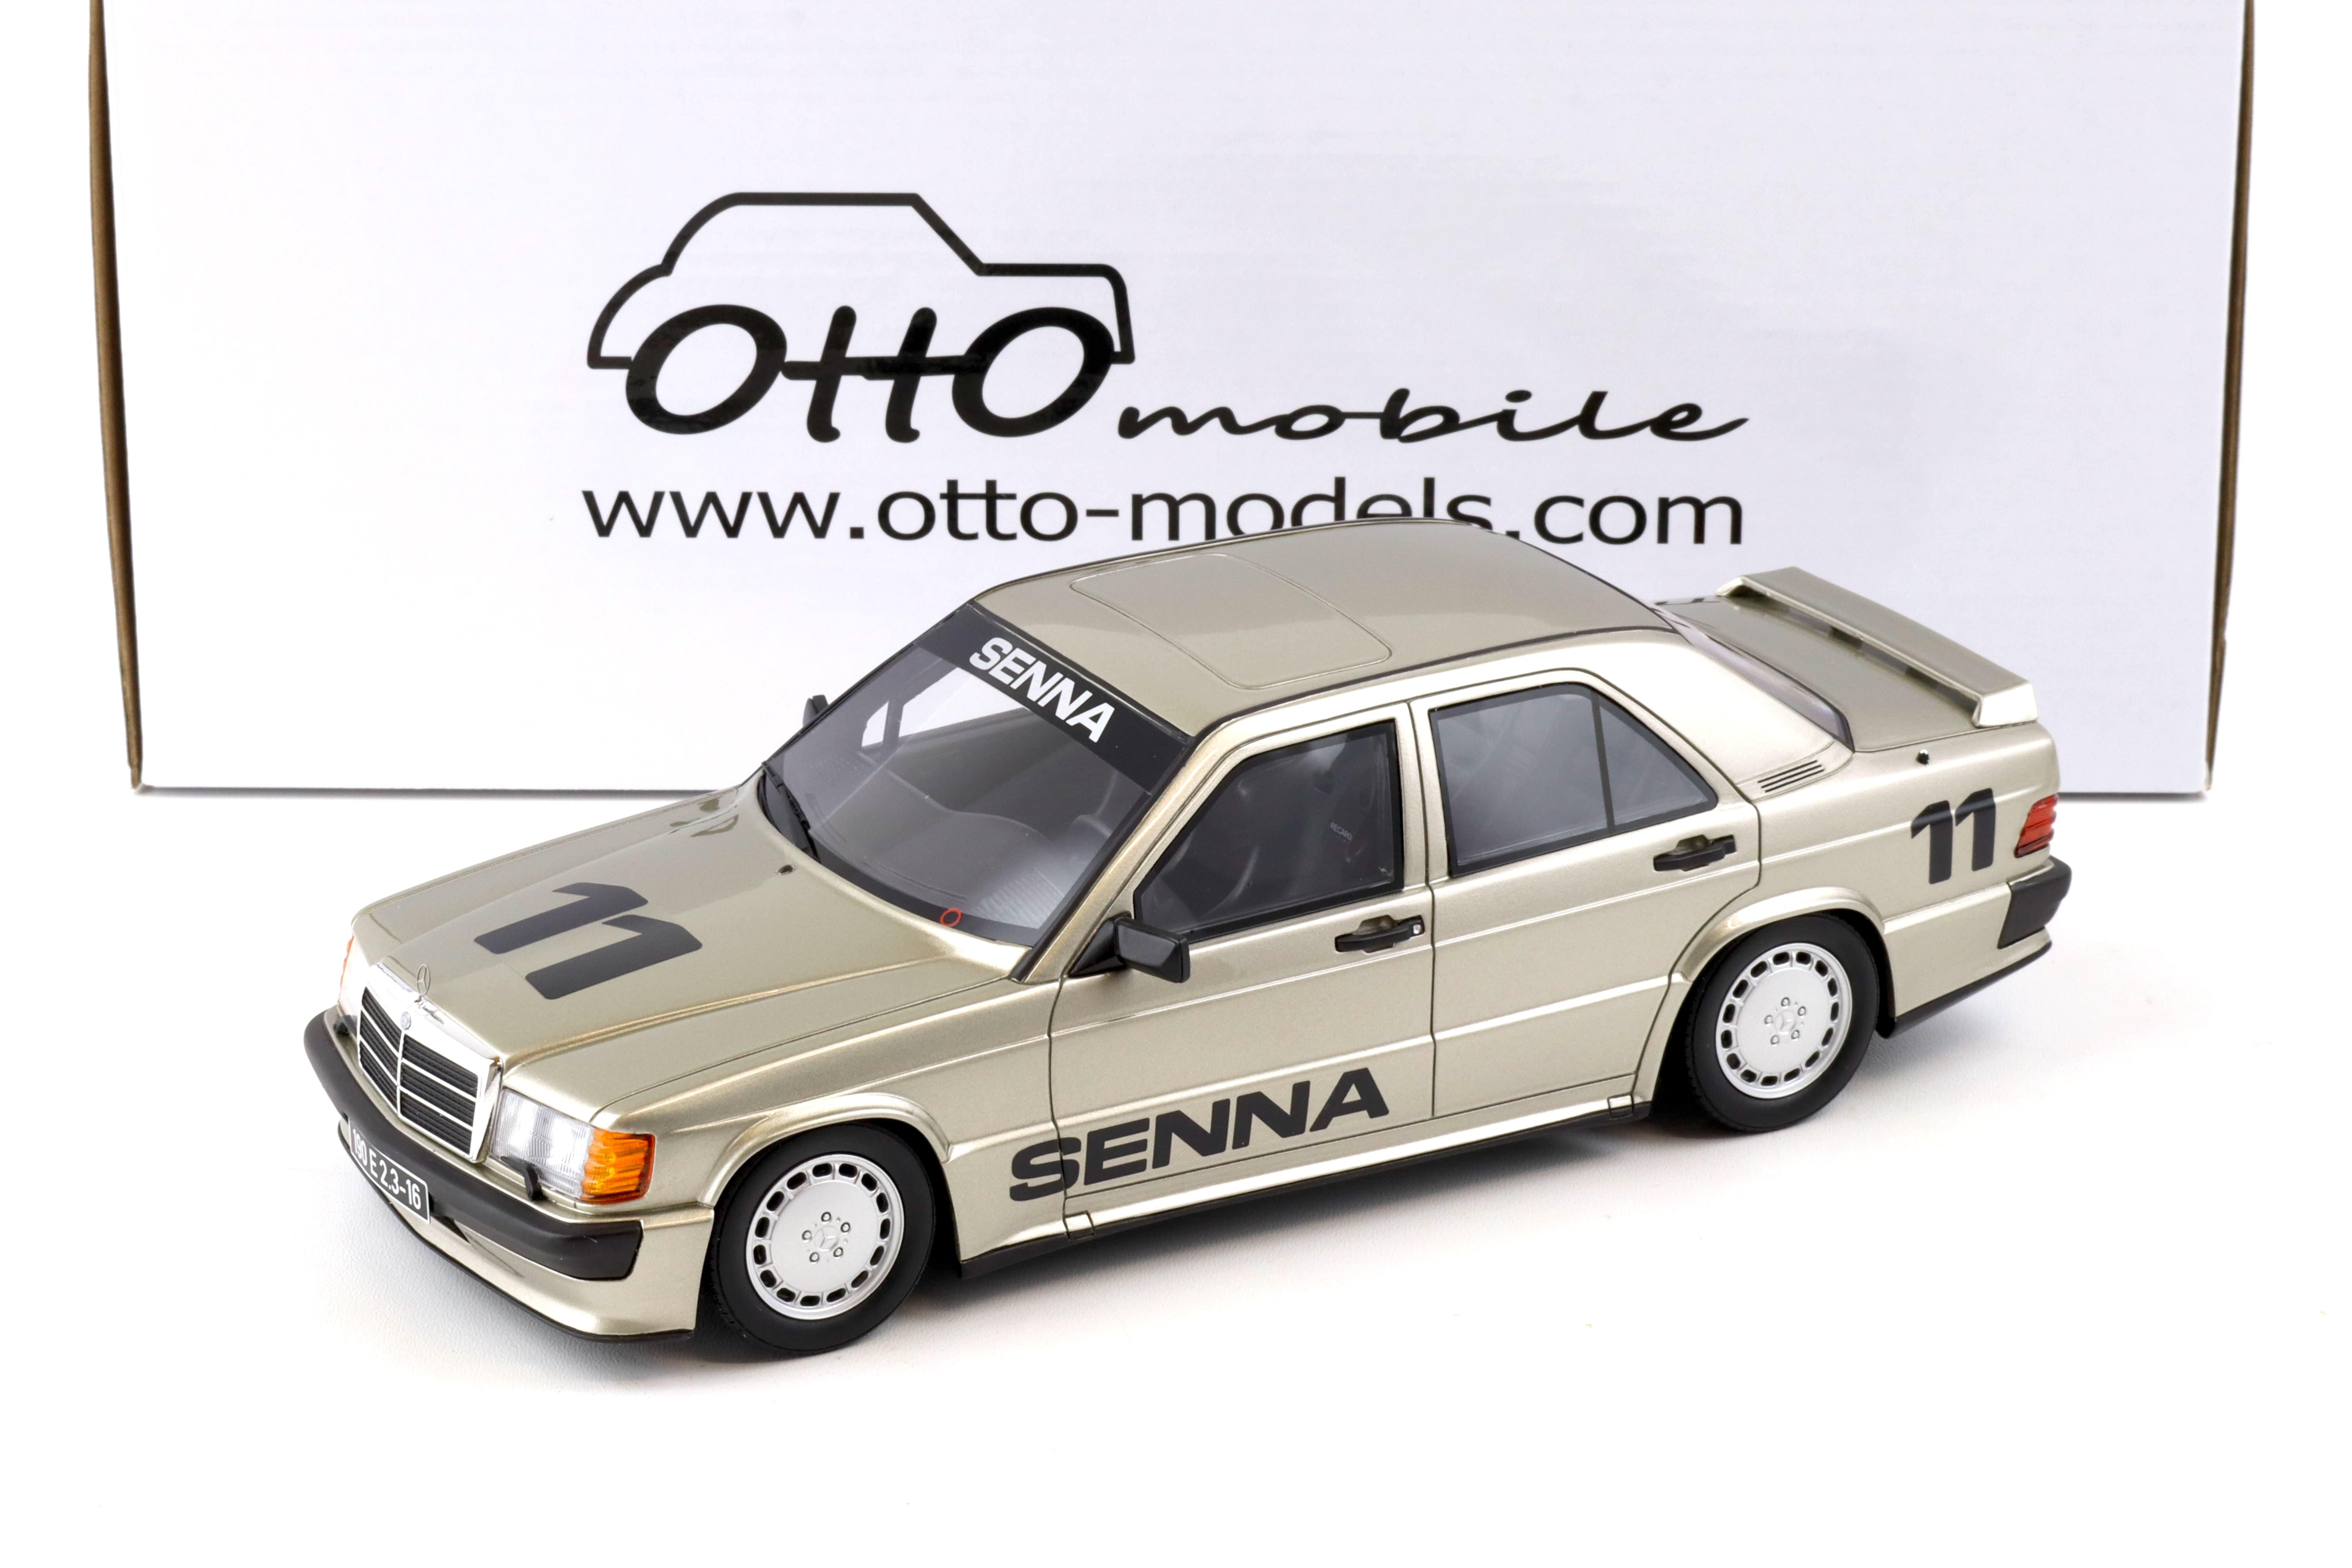 1:18 OTTO mobile OT1041 Mercedes 190E 2.3-16 W201 Senna Nürburgring 1984